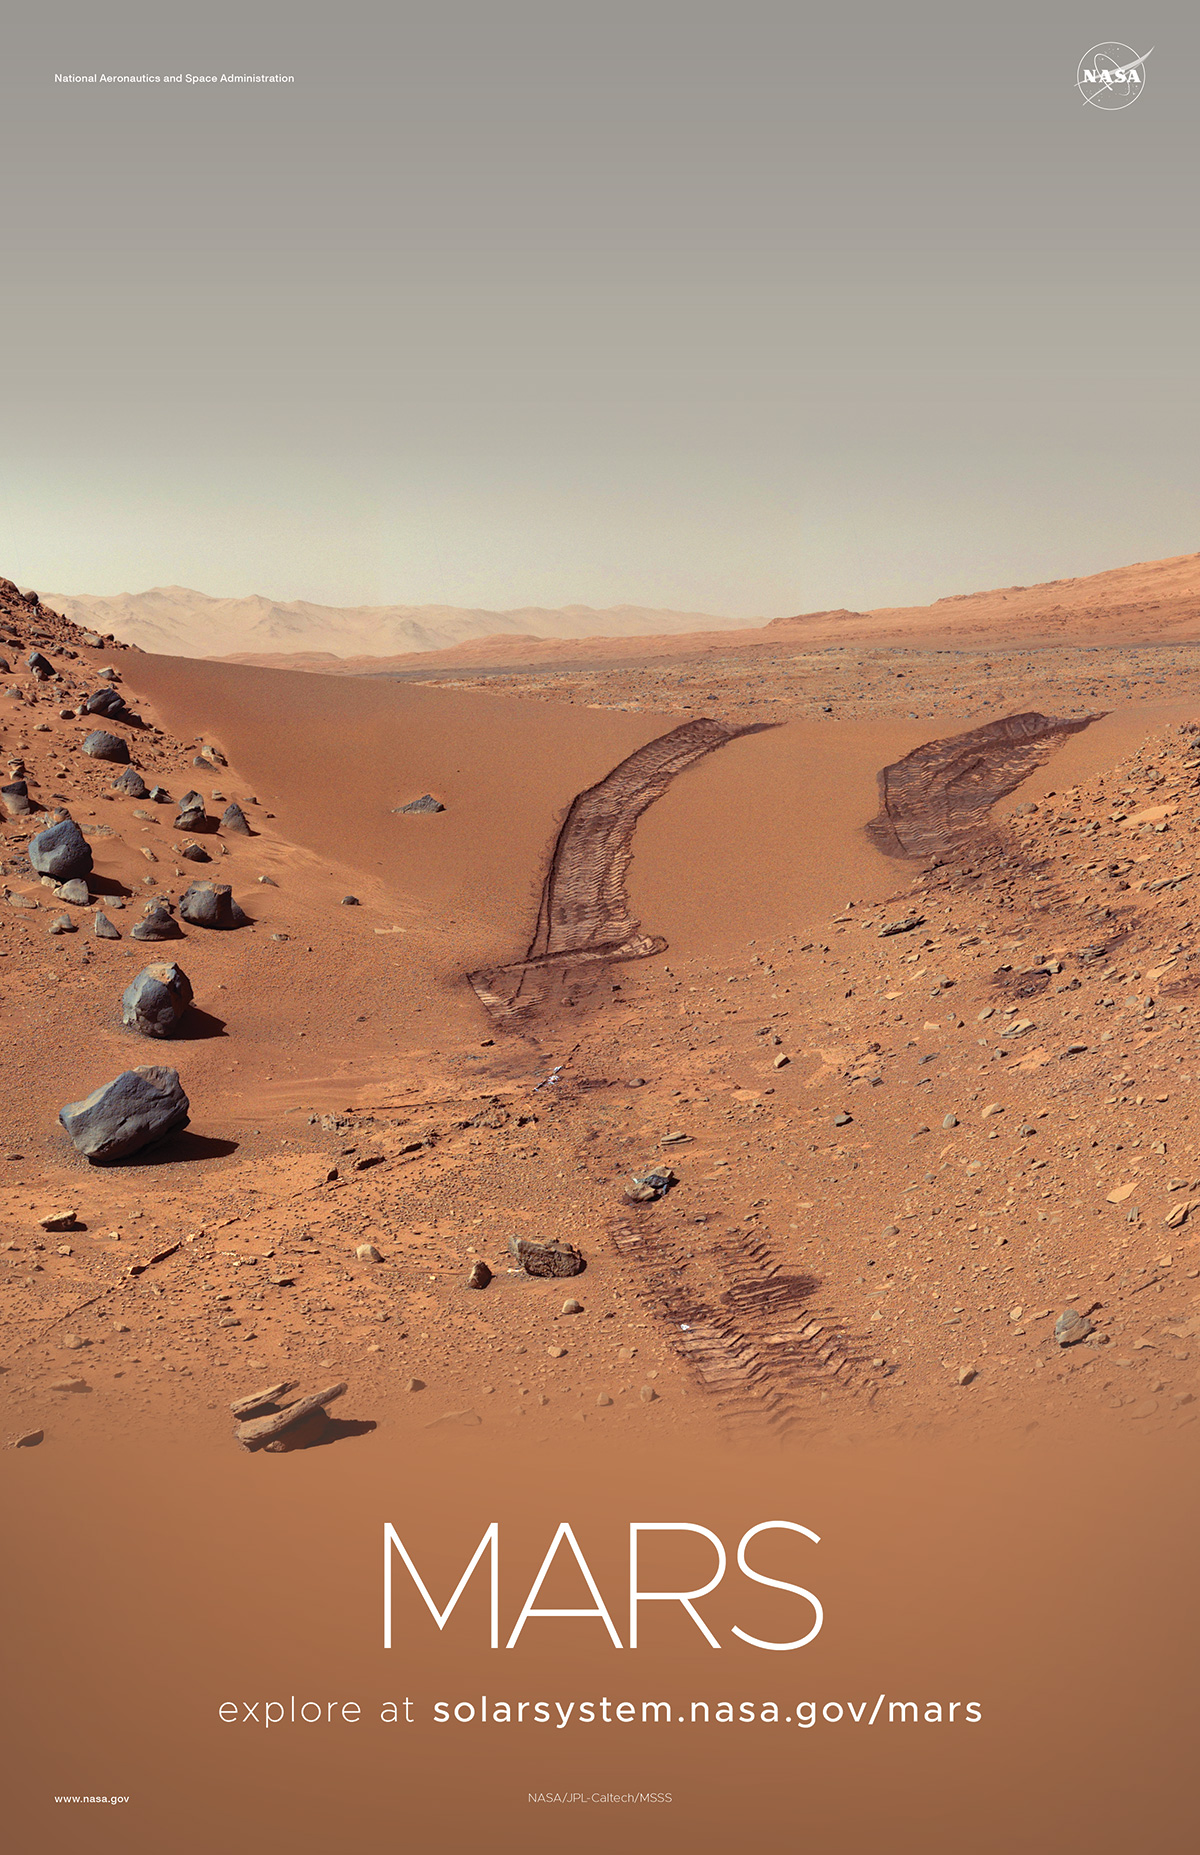 Image of the Martian surface, courtesy of NASA.